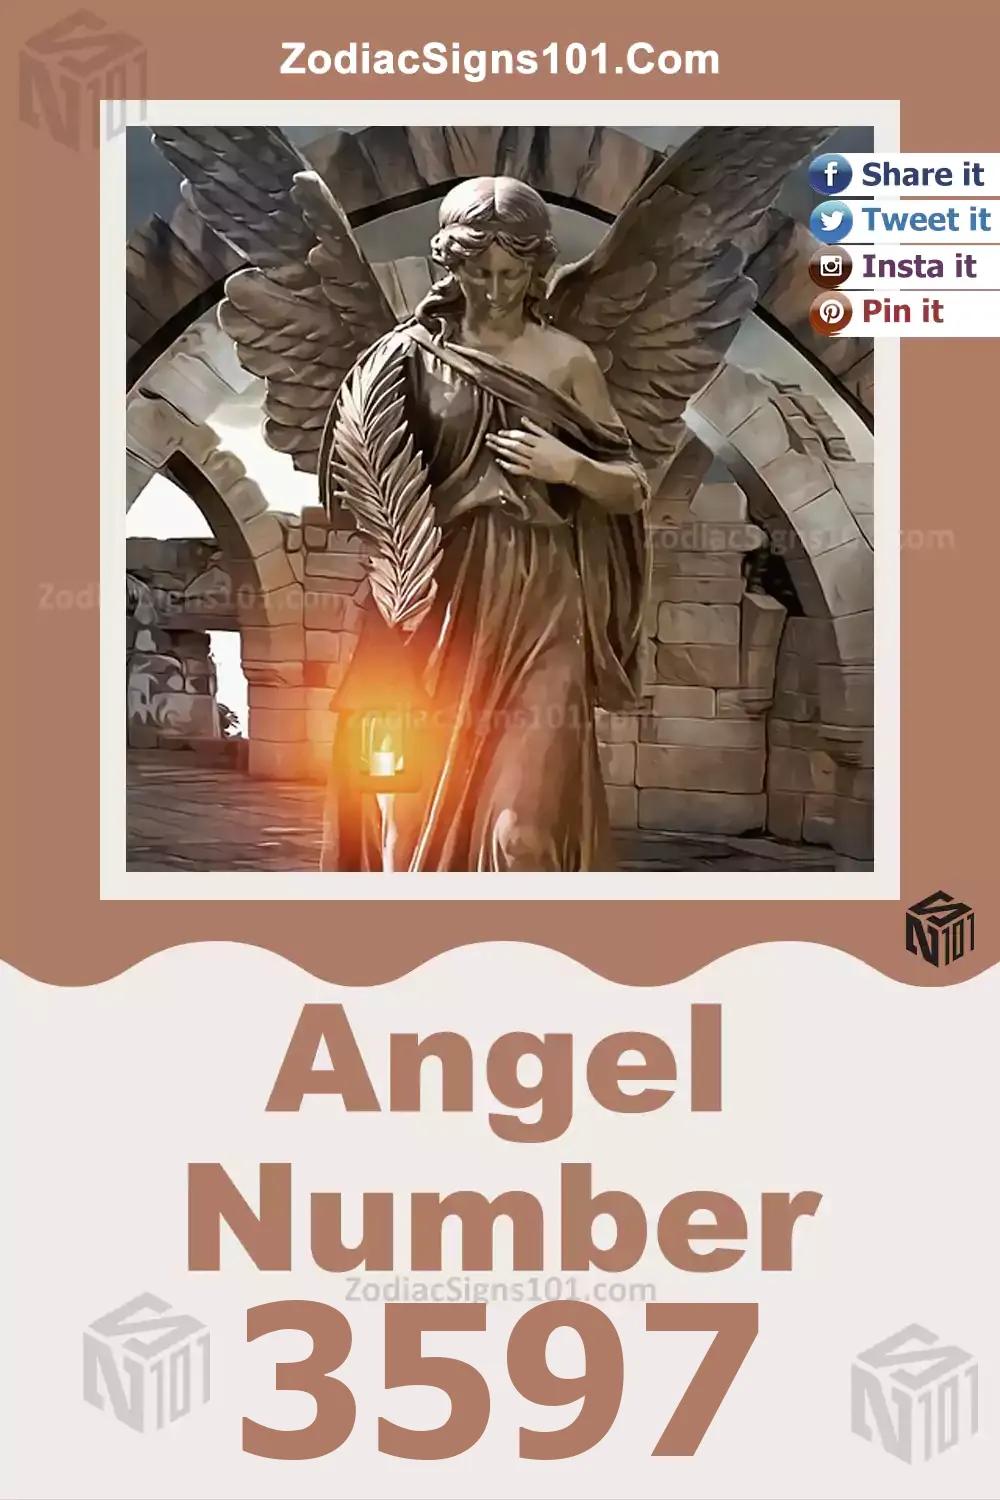 3597-Angel-Number-Meaning.jpg